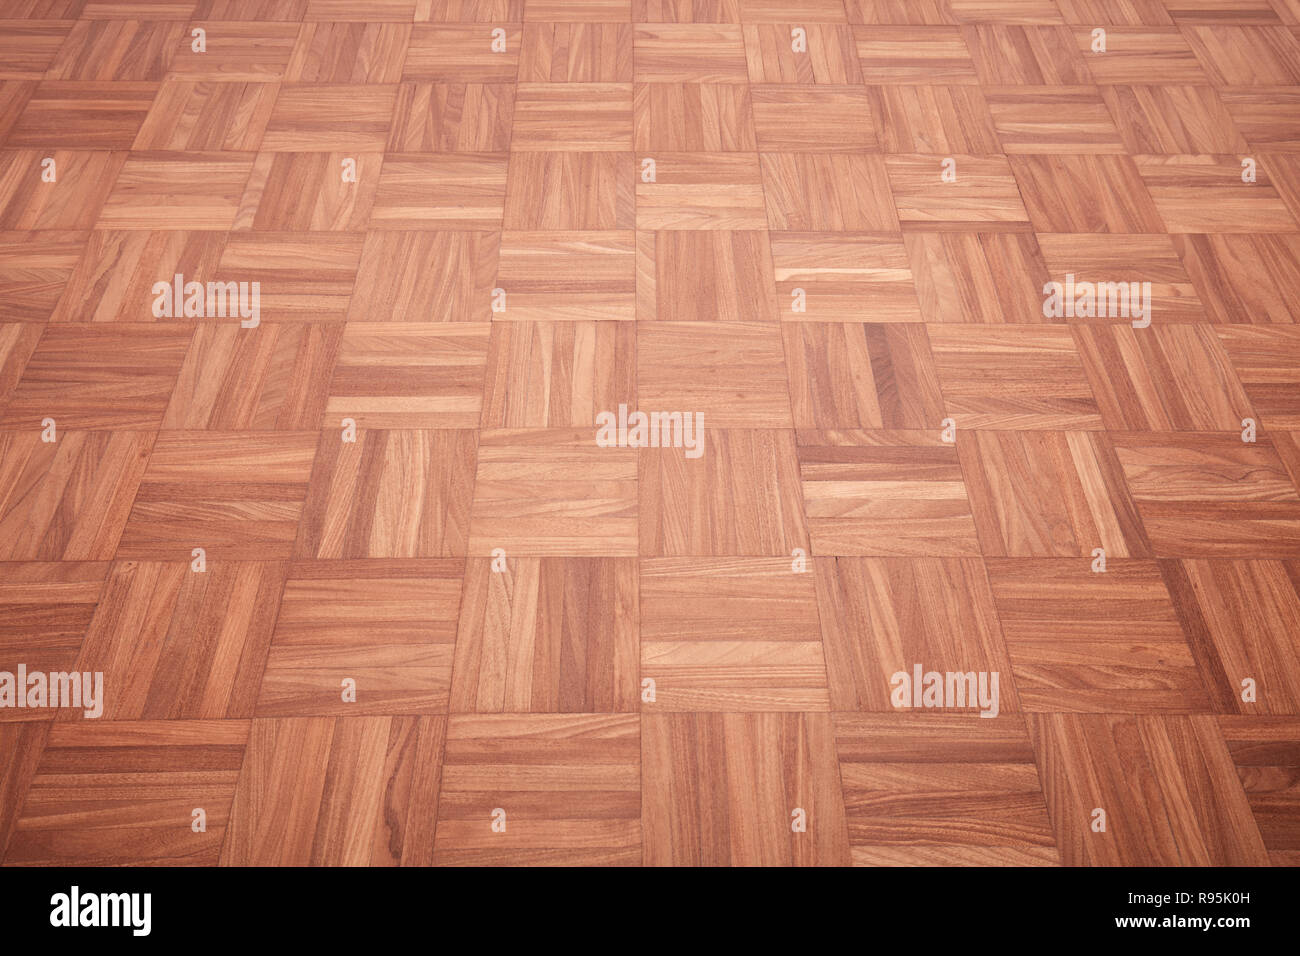 Brown wooden tiled floor texture background Stock Photo